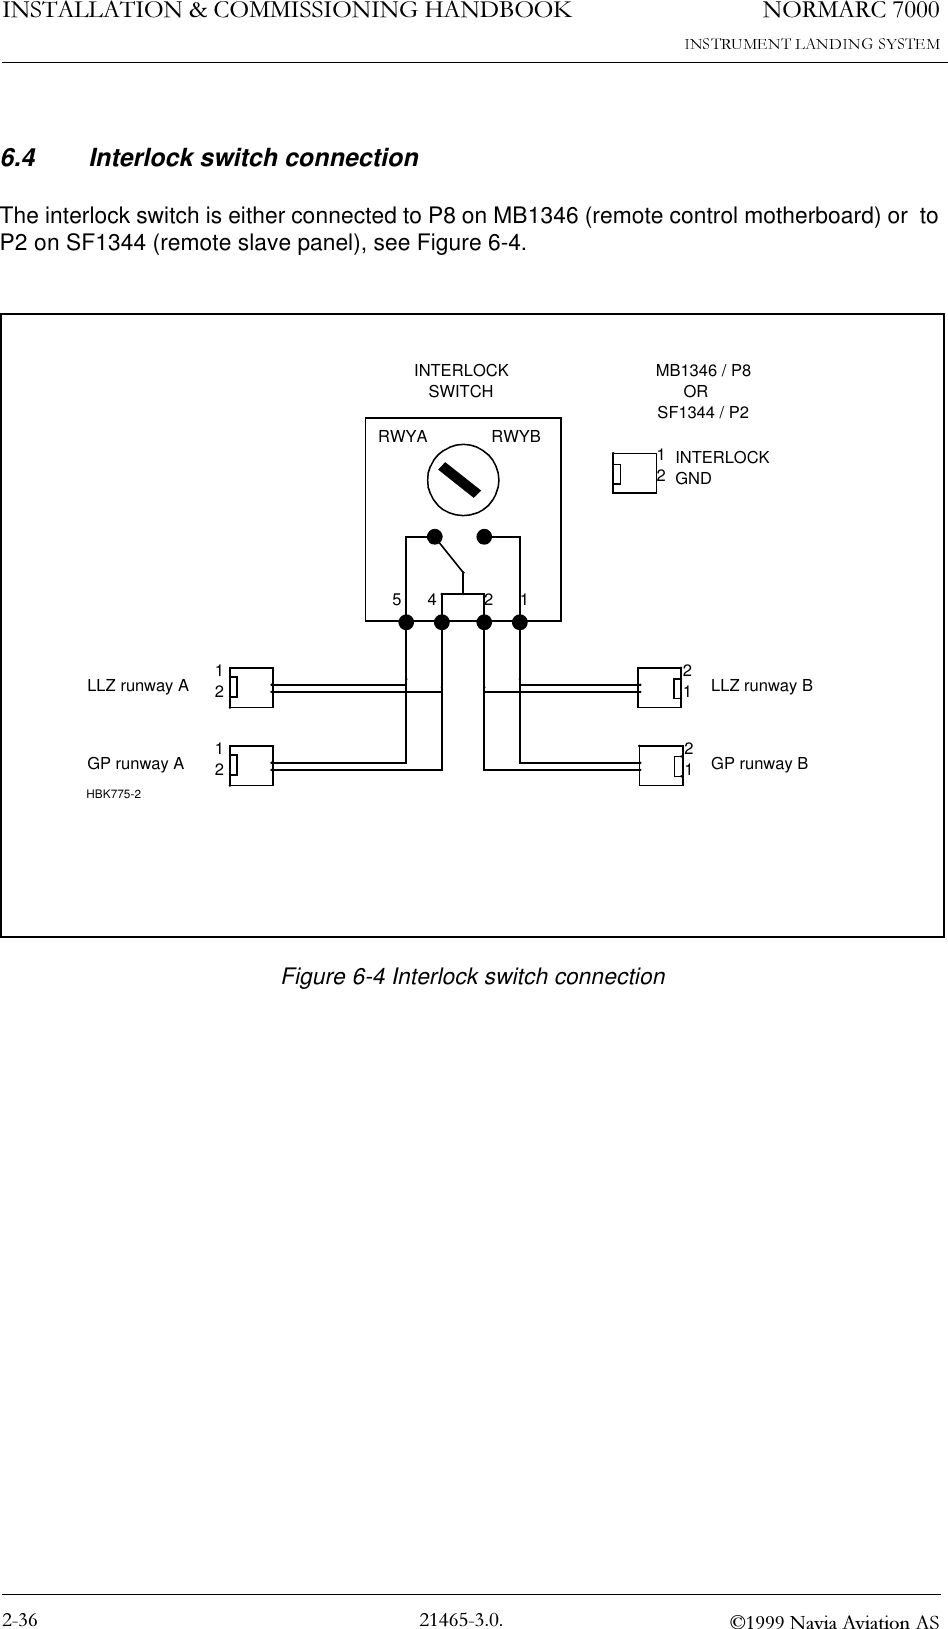 1250$5&amp;,167$//$7,21&amp;200,66,21,1*+$1&apos;%22. 1DYLD$YLDWLRQ$66.4 Interlock switch connectionThe interlock switch is either connected to P8 on MB1346 (remote control motherboard) or  to P2 on SF1344 (remote slave panel), see Figure 6-4.Figure 6-4 Interlock switch connection21MB1346 / P8ORSF1344 / P2INTERLOCK SWITCHRWYA RWYB211212INTERLOCKGND1254 21LLZ runway AGP runway ALLZ runway BGP runway BHBK775-2